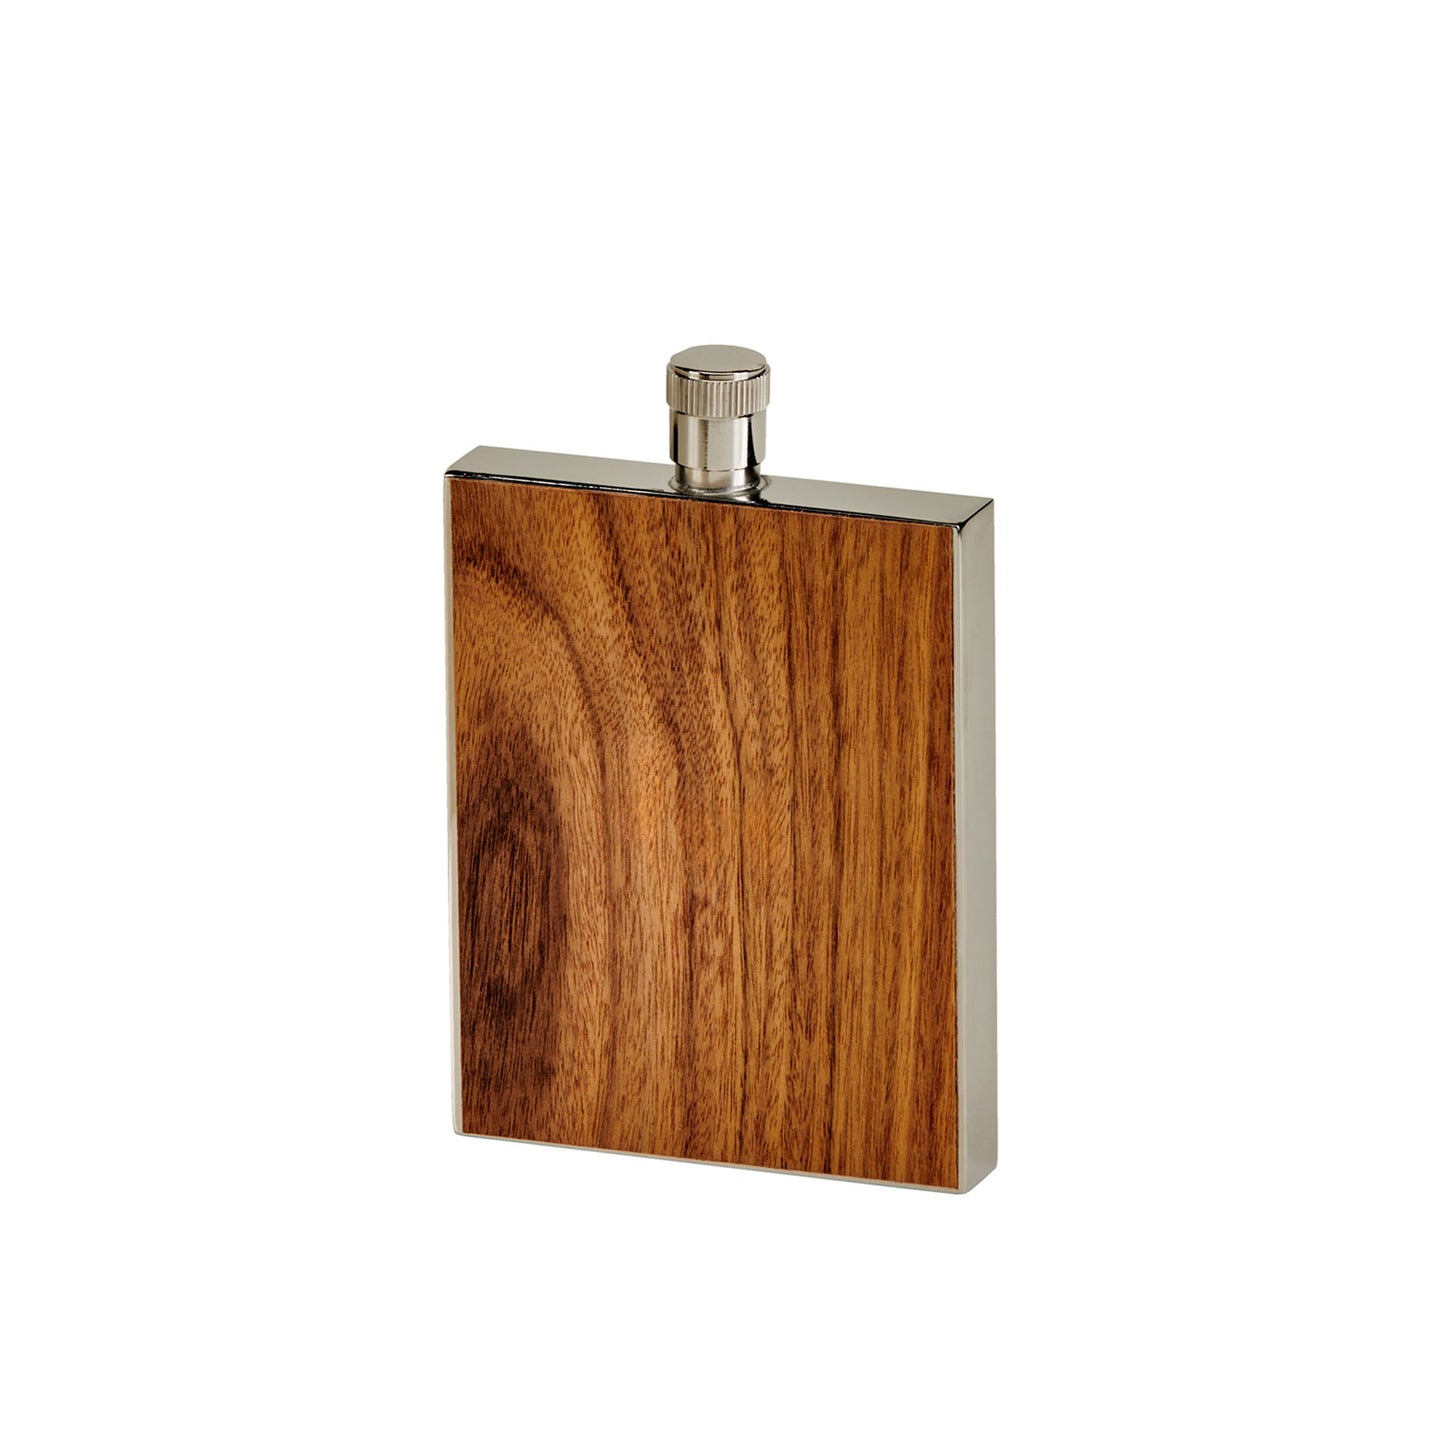 Wood Grain Flask - 3 Oz by Creative Gifts